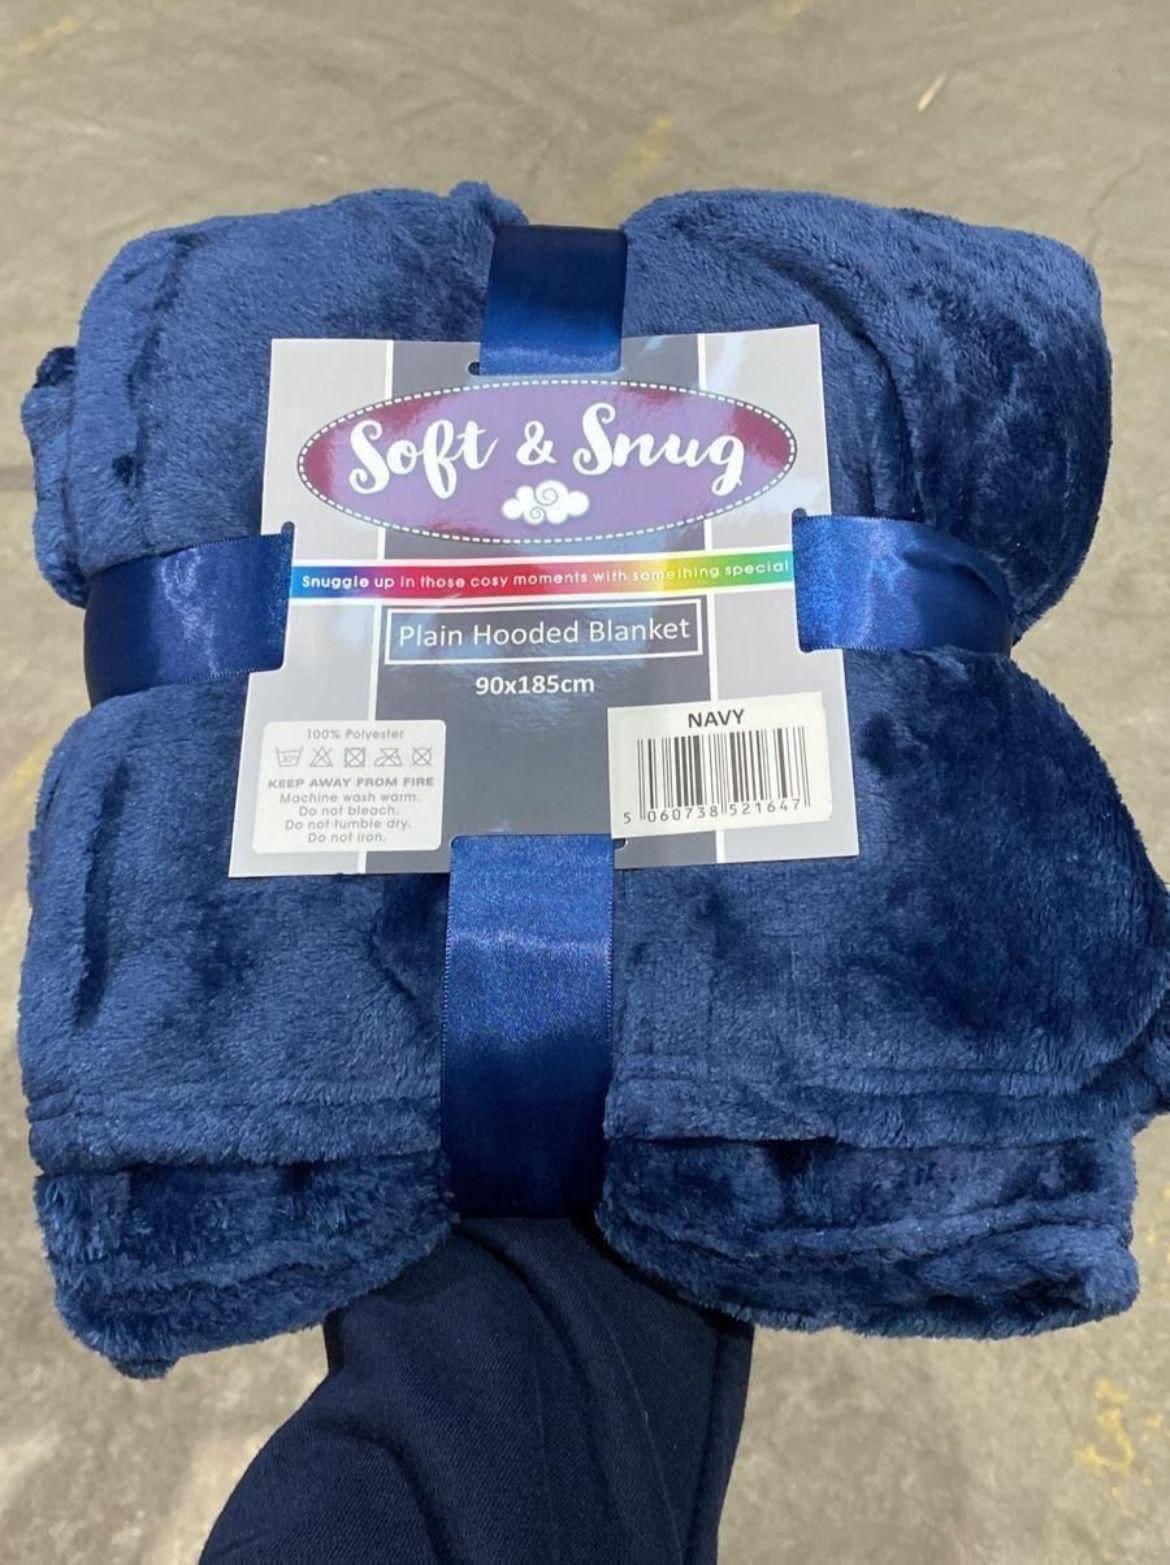 ⭐️ Soft & snug hooded blanket  90x185cm